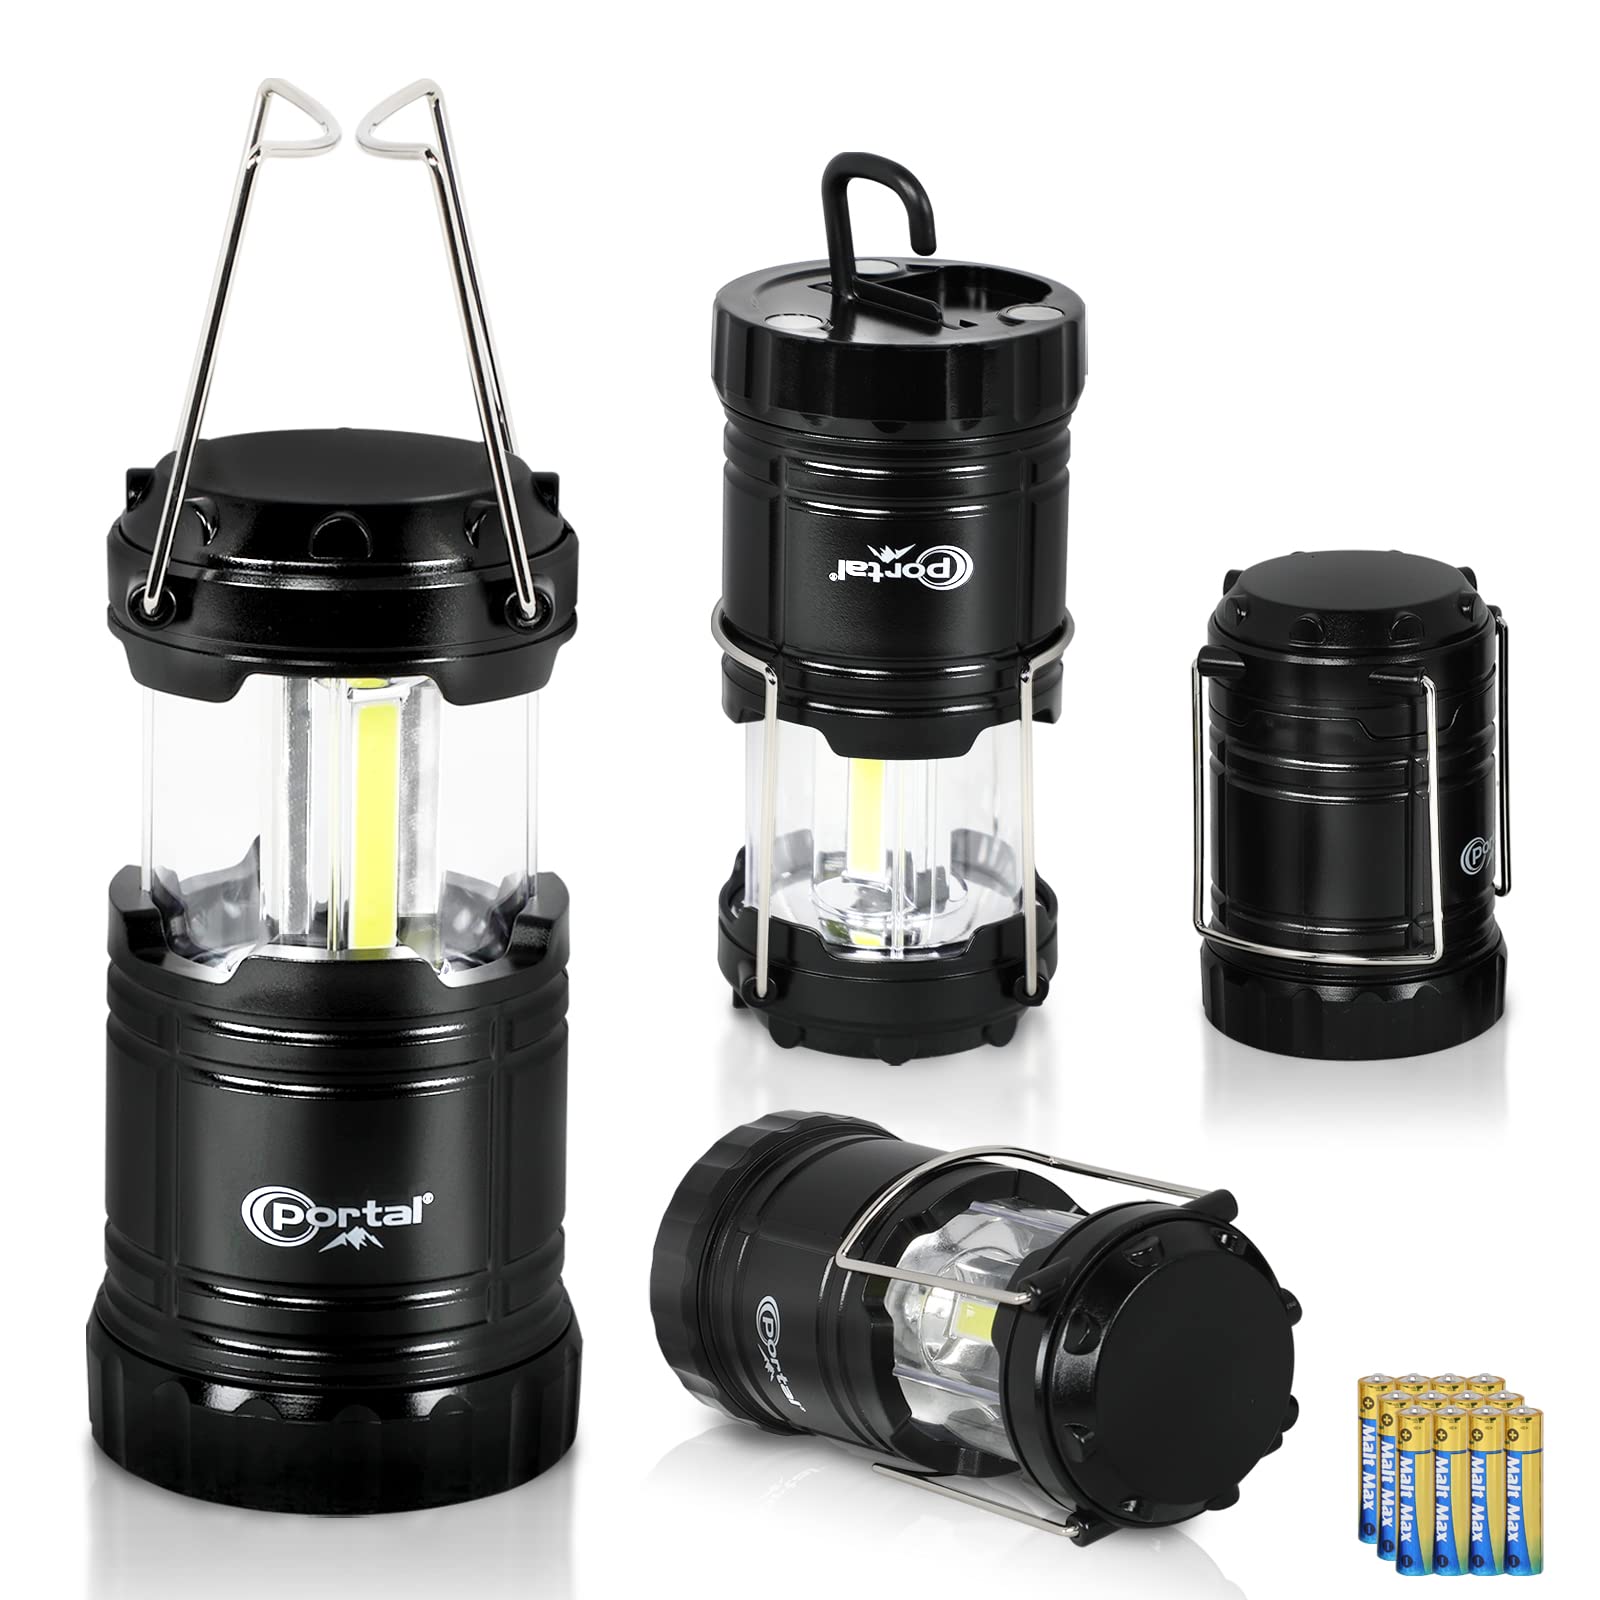 Pop Up LED Lantern -2 Pack- Perfect